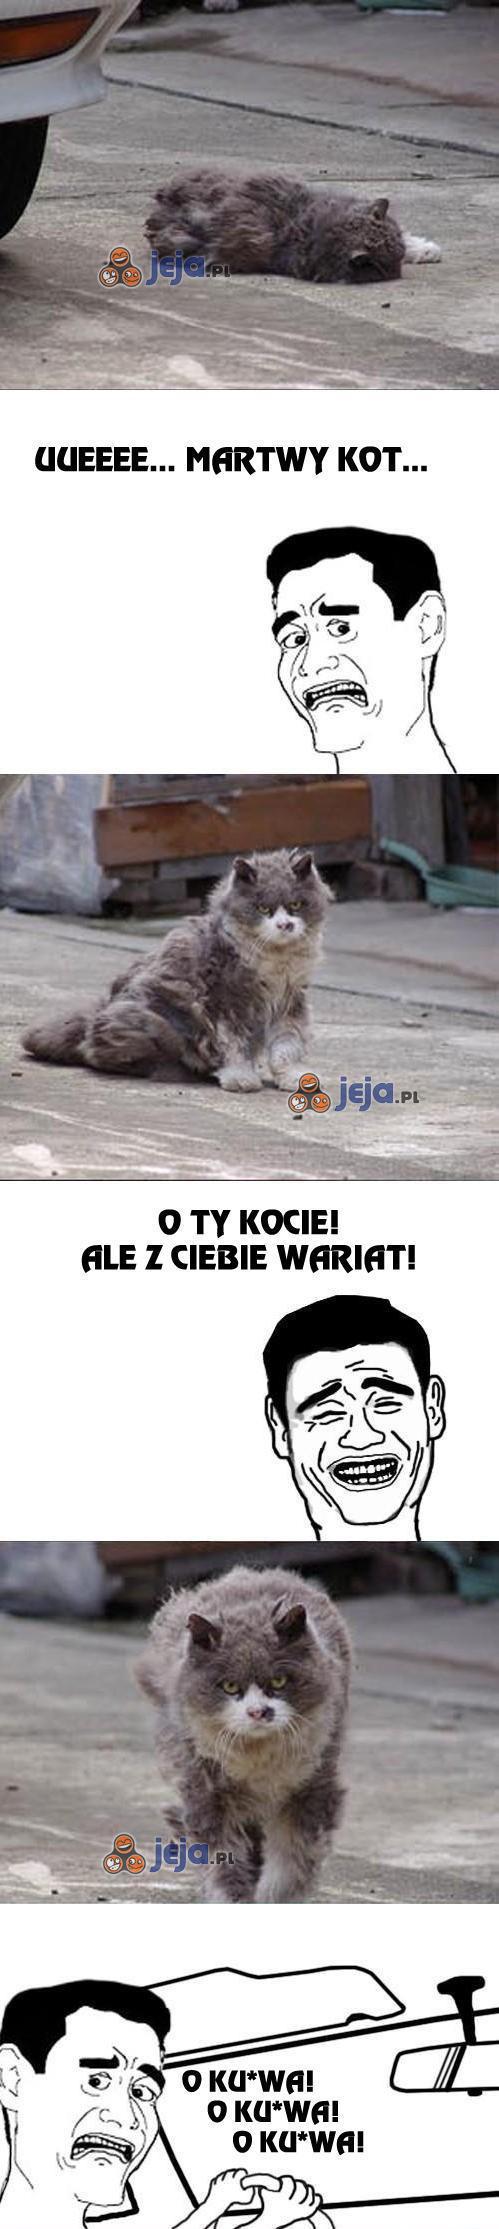 Martwy kot? - Jeja.pl